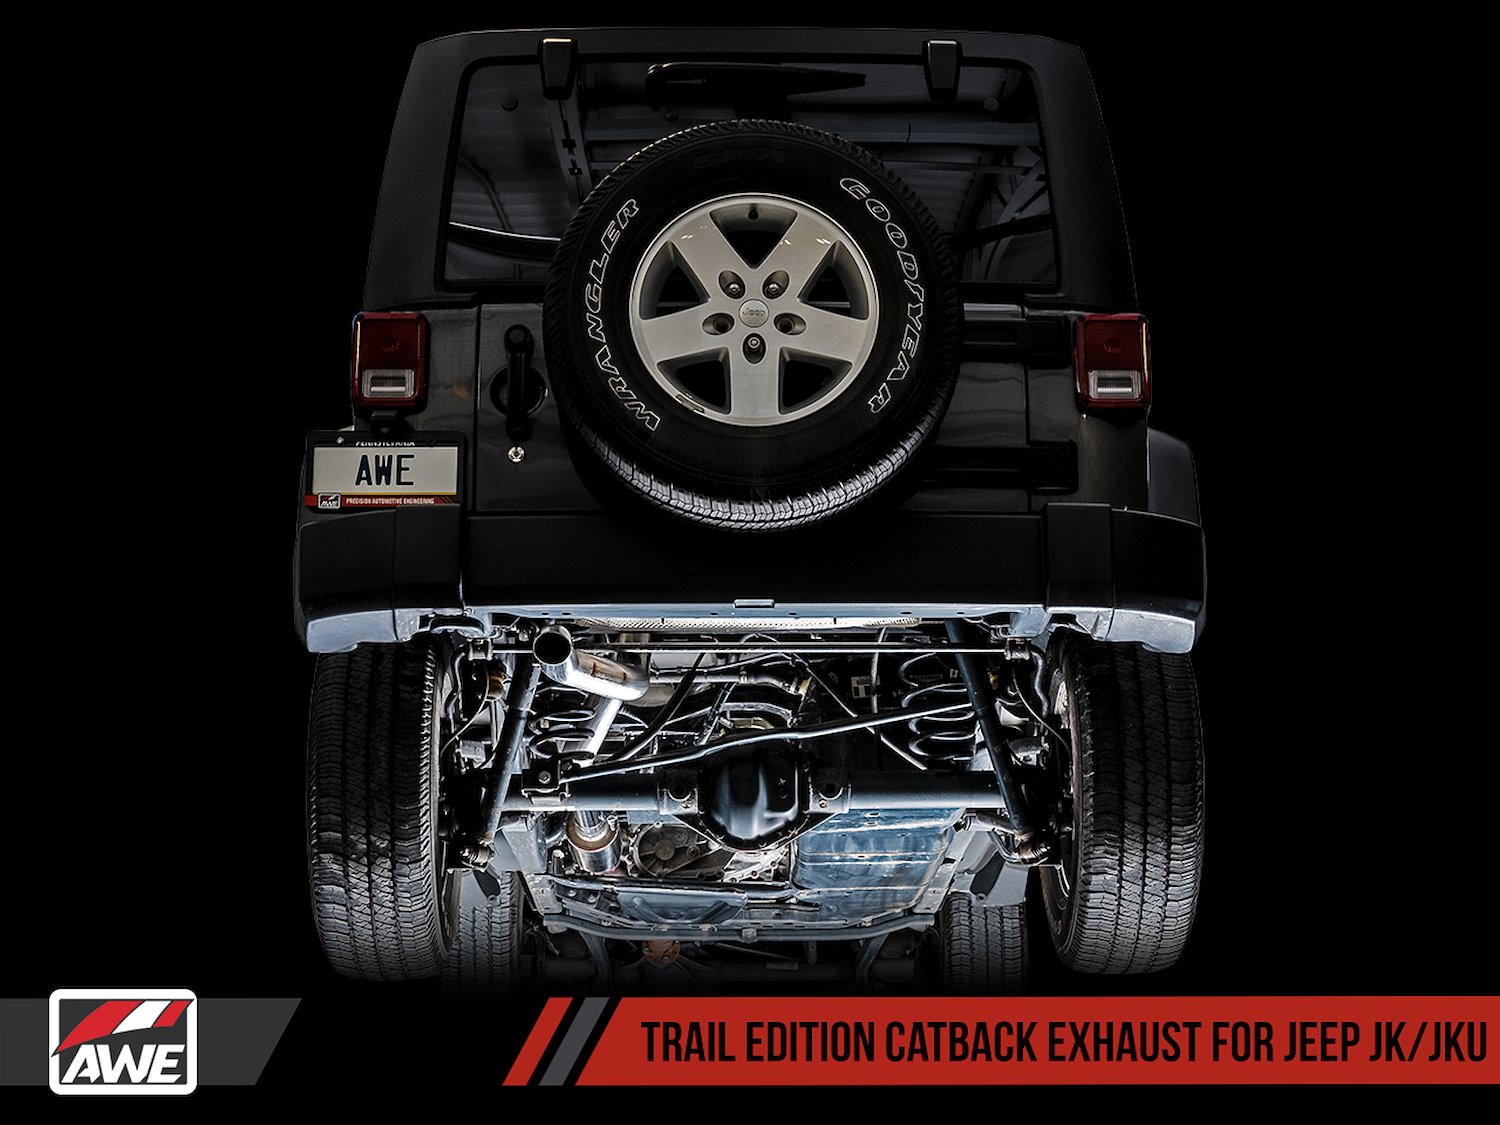 Trail Edition Cat-back Exhaust for Jeep JK/JKU 3.6L